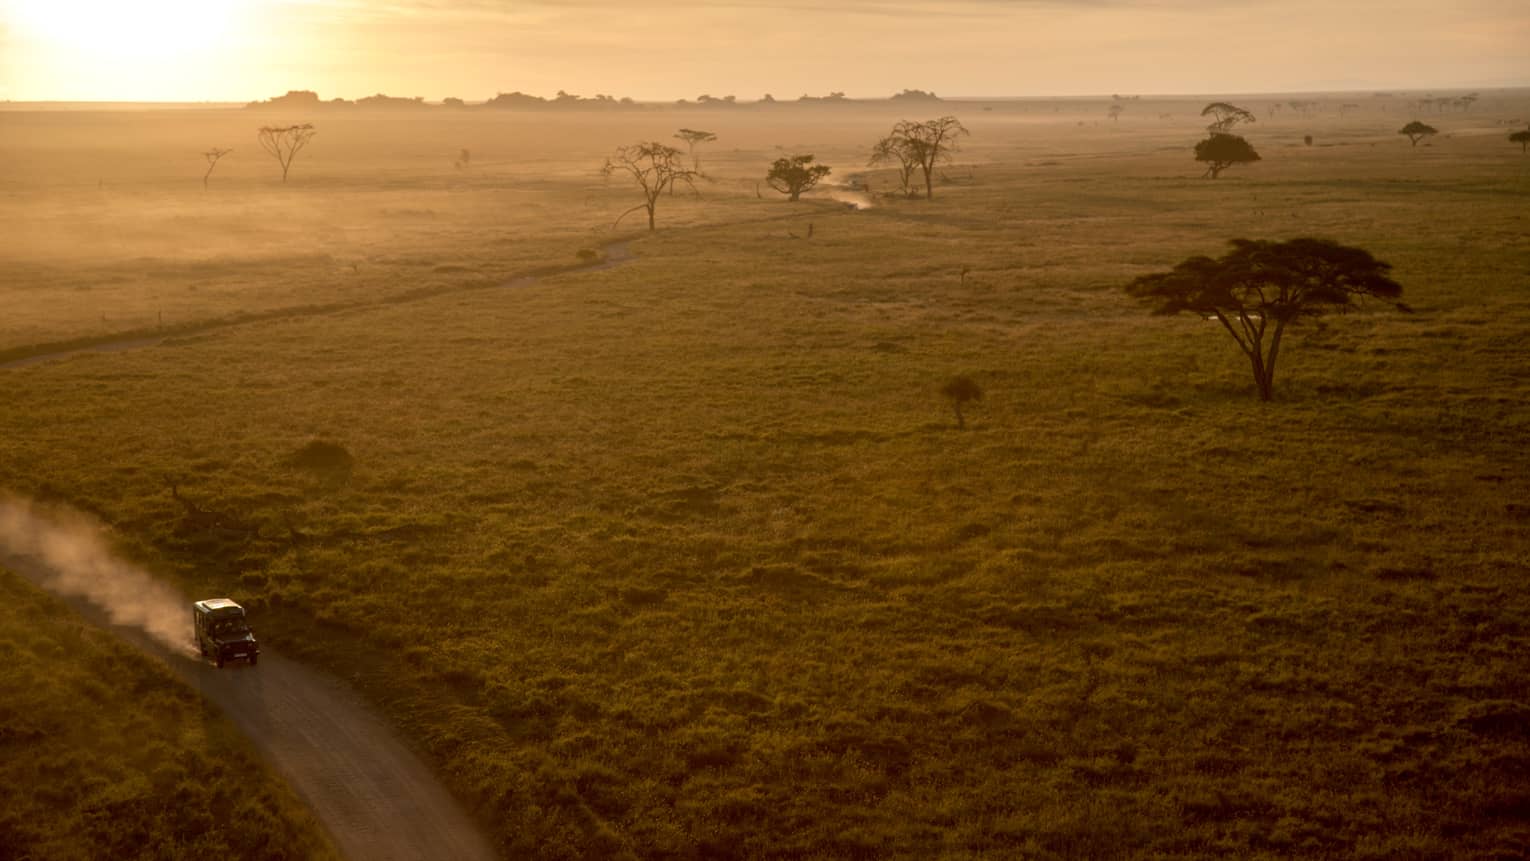 Sunset over Serengeti plains, trees